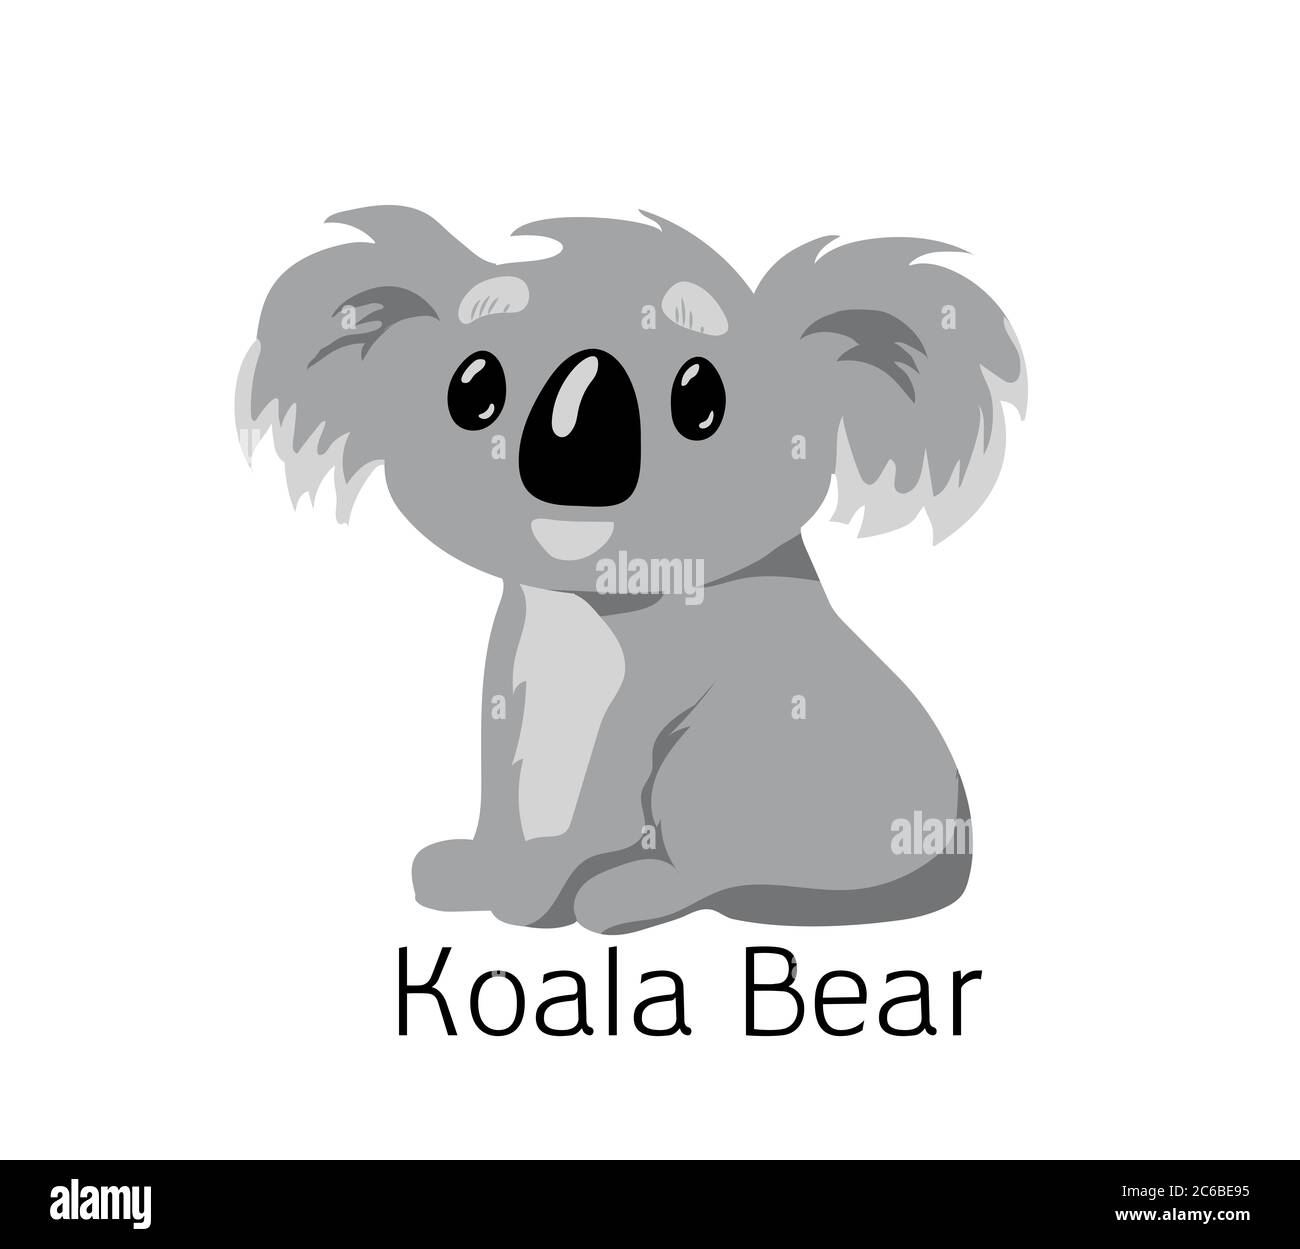 Koala bear clip art hi-res stock photography and images - Alamy